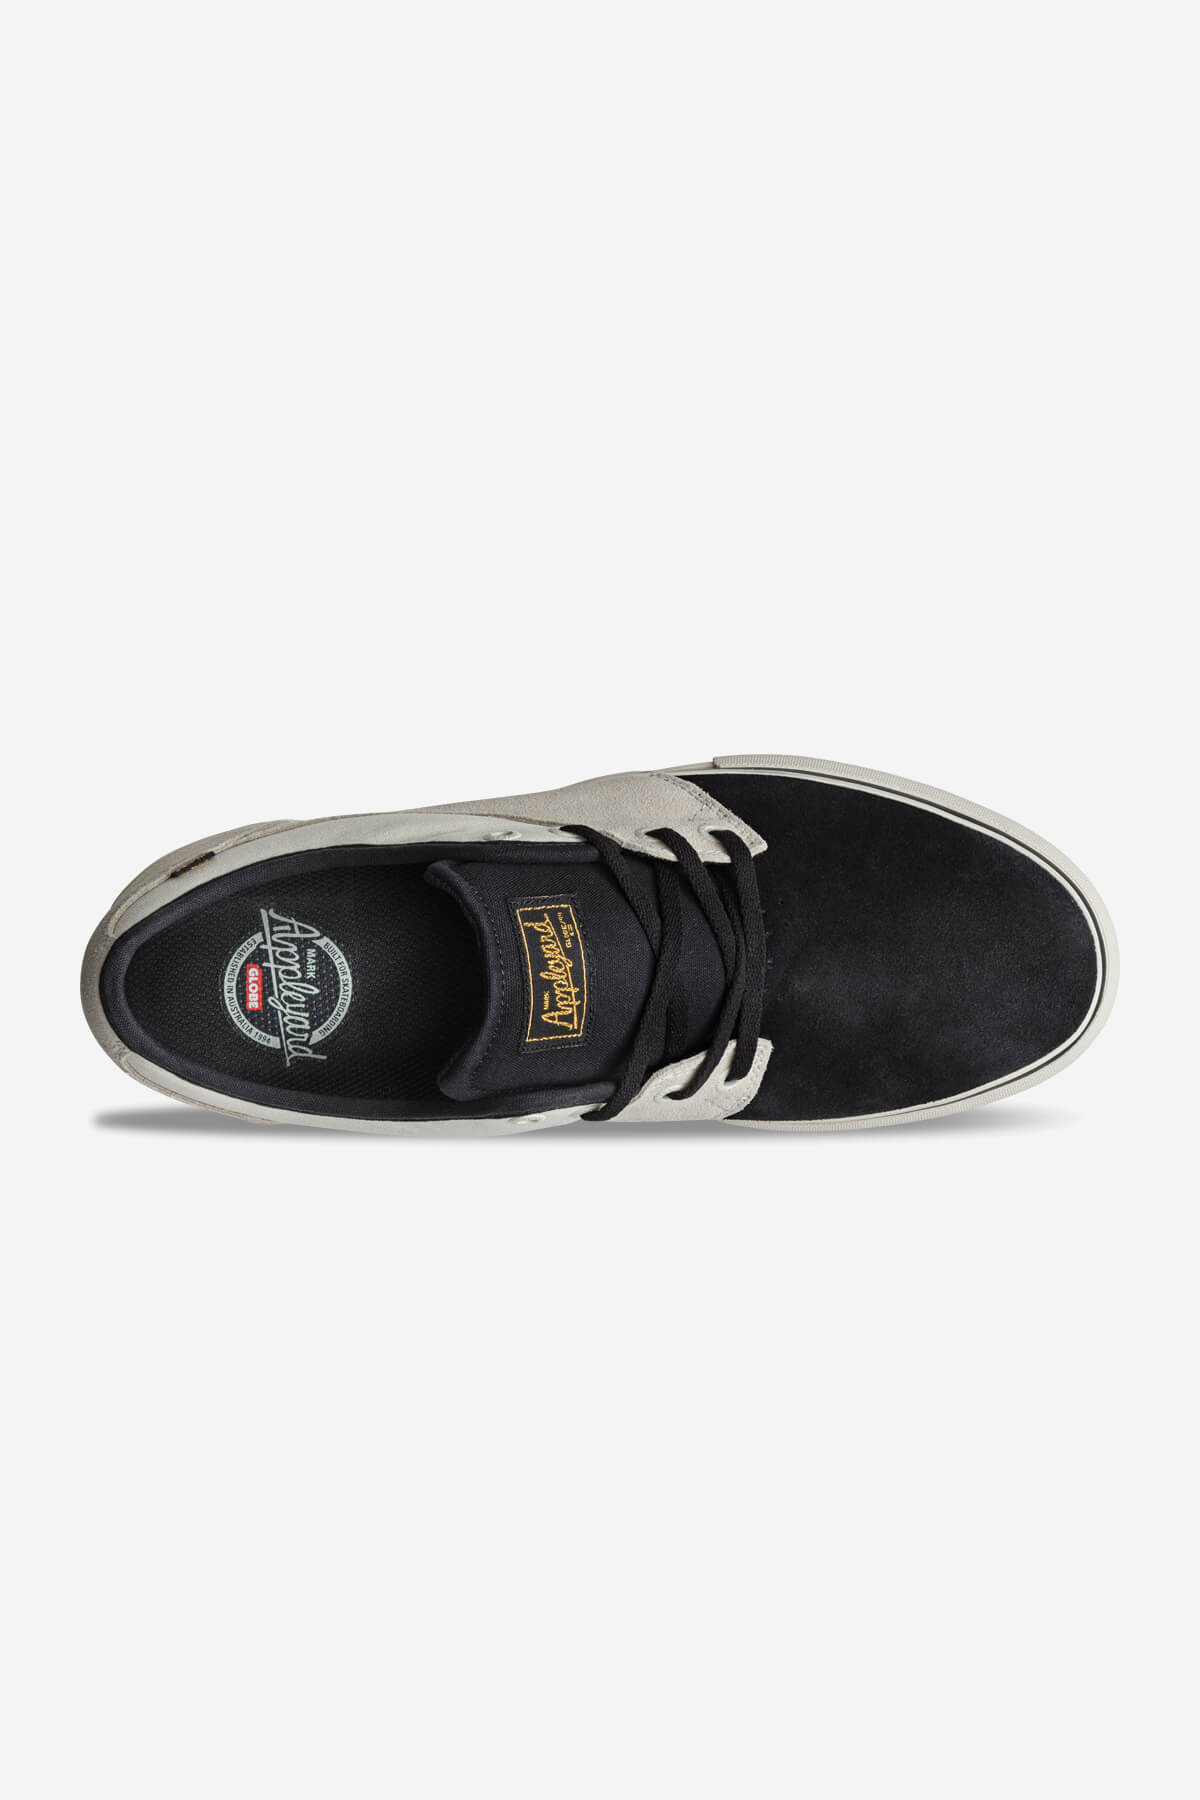 mahalo zwart van white skateboard  schoenen